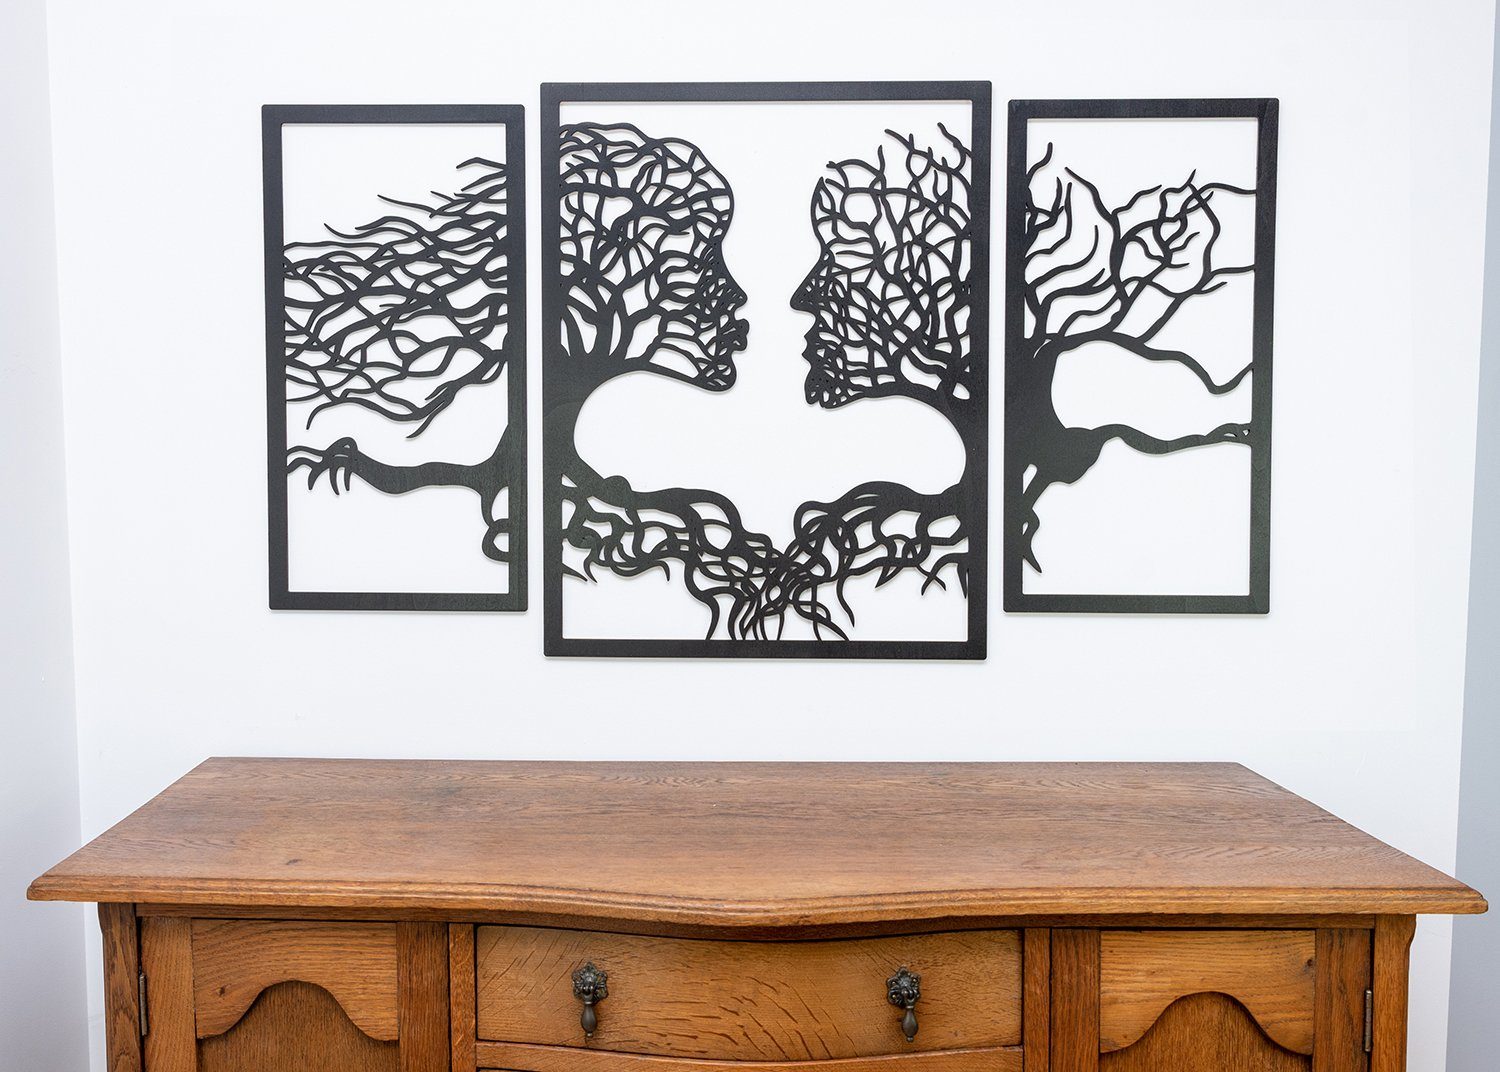 ORNAMENTI Holzbild 3D grosse Wandpaneel Gesichter Baum, Wanddekoration, Handmade